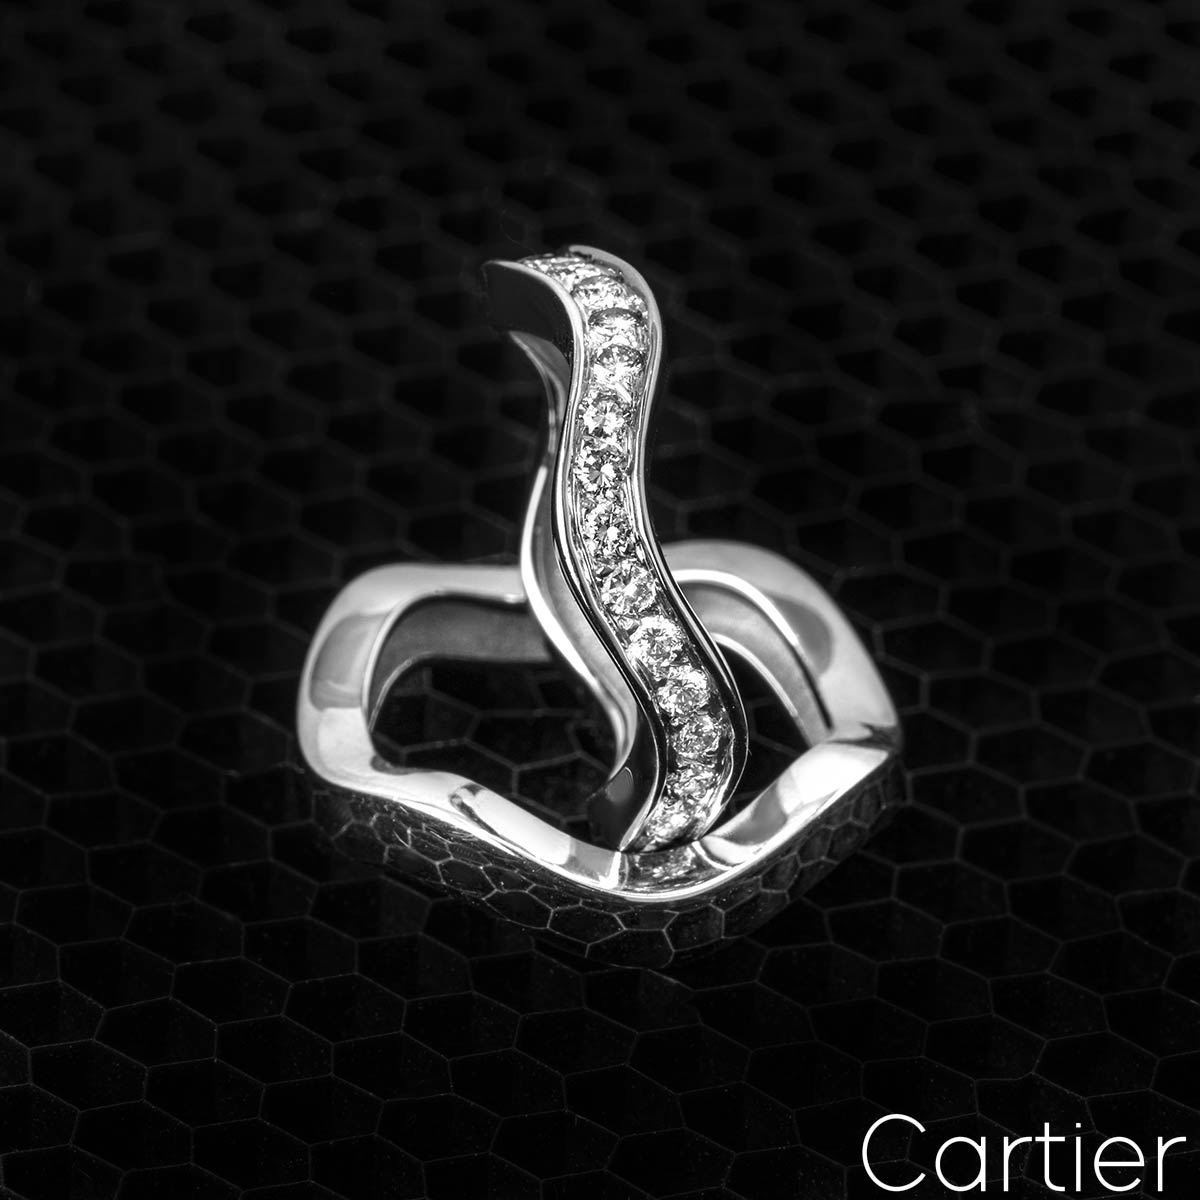 Cartier White Gold Diamond Stacker Rings